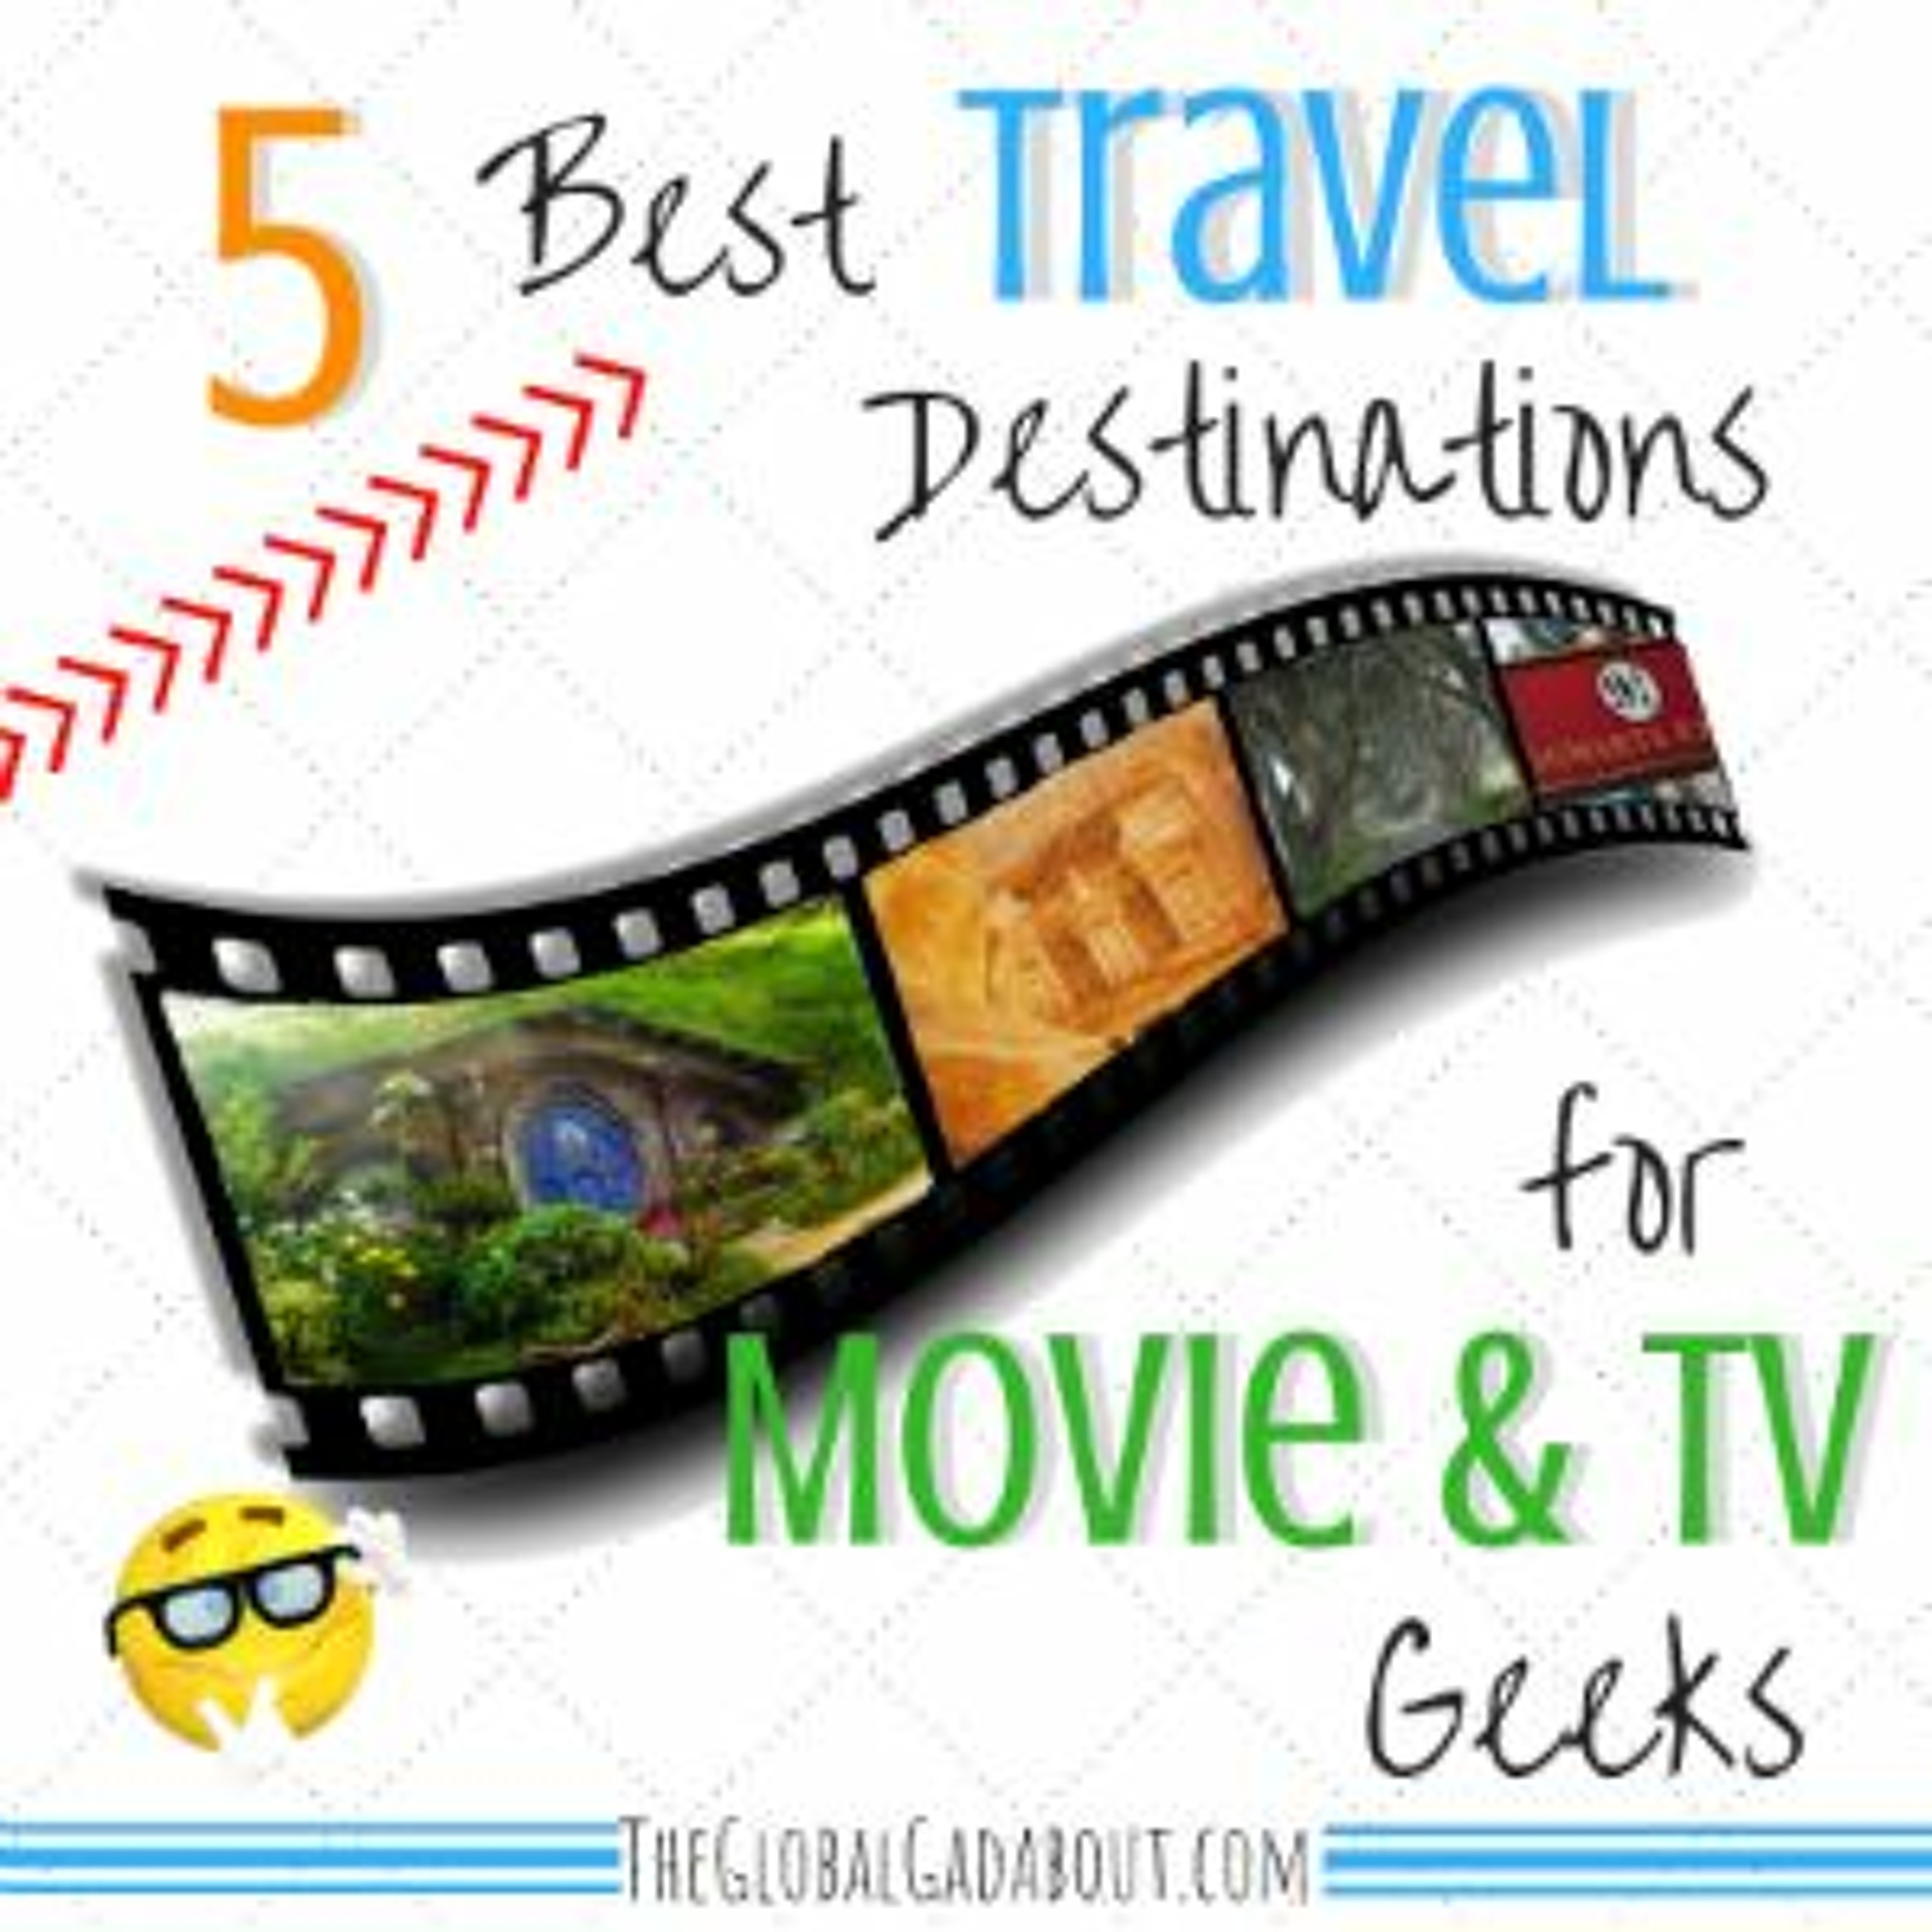 5 Best Travel Destinations For Movie & TV Geeks